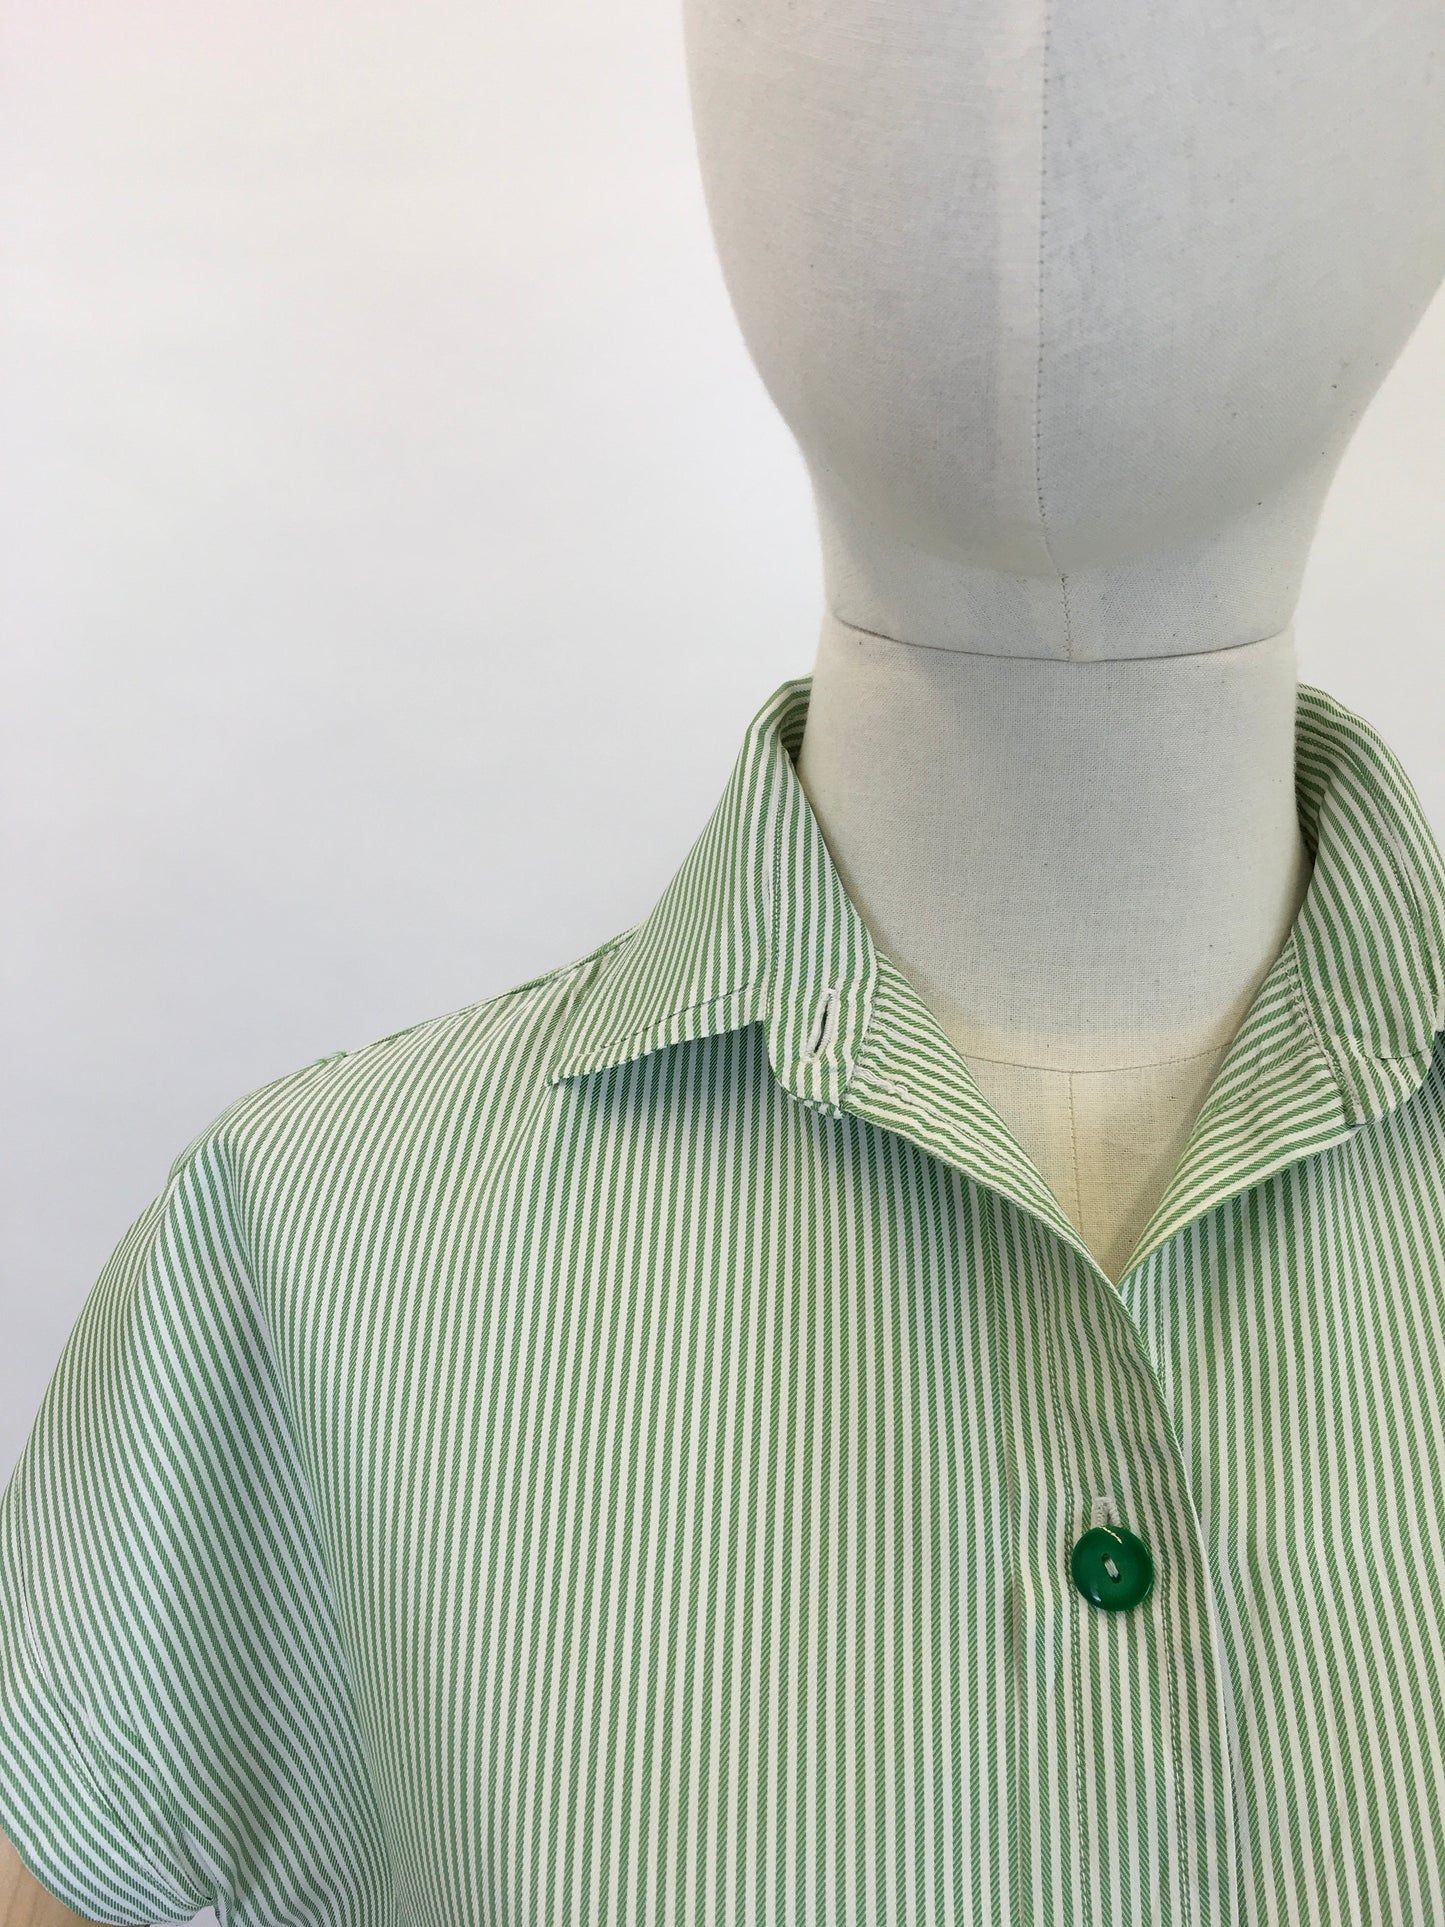 Original 1950’s Green & White Striped Blouse - By ‘ Em Cooper ‘ Label